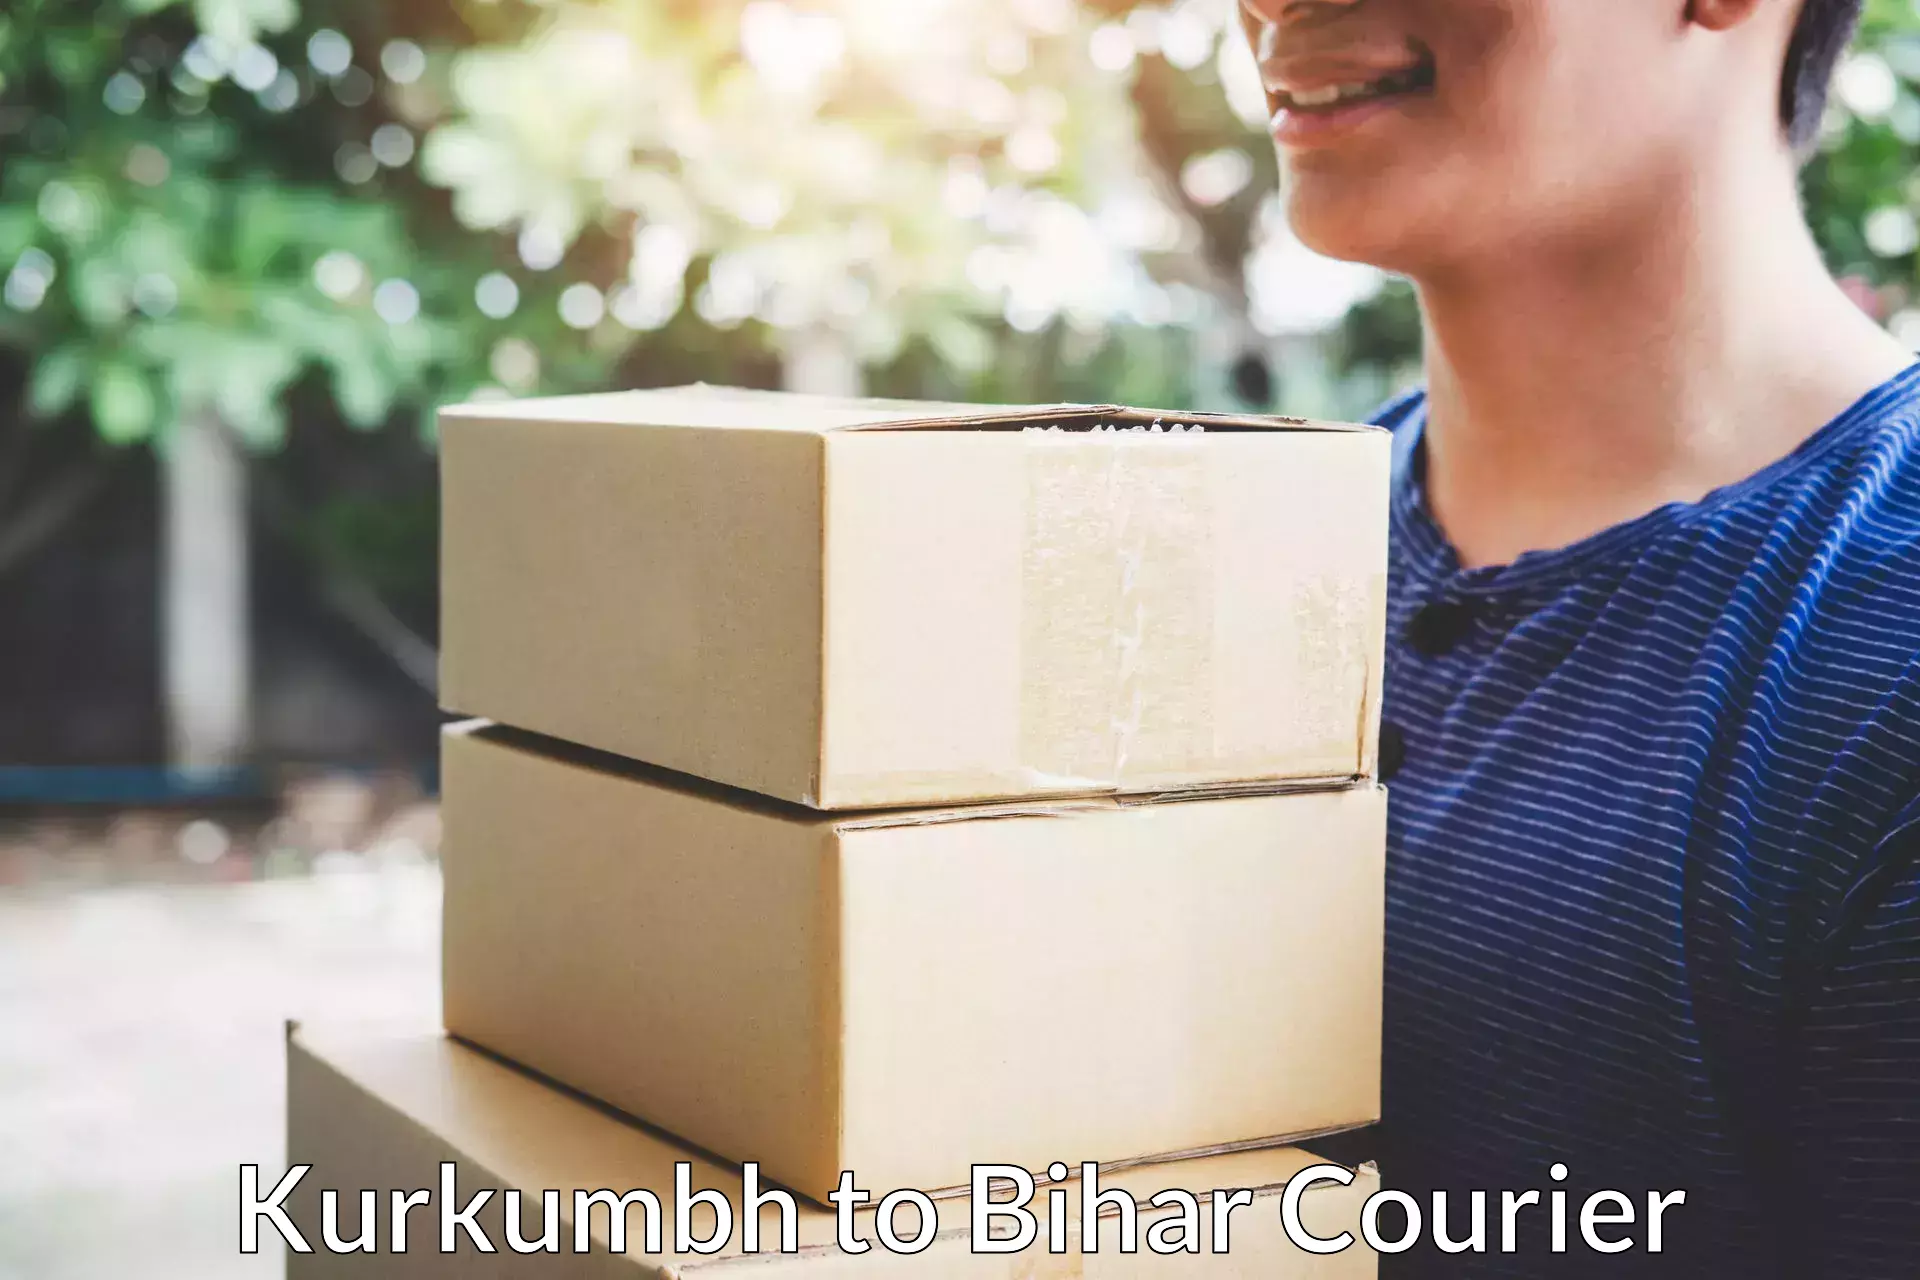 Professional furniture movers in Kurkumbh to Bihar